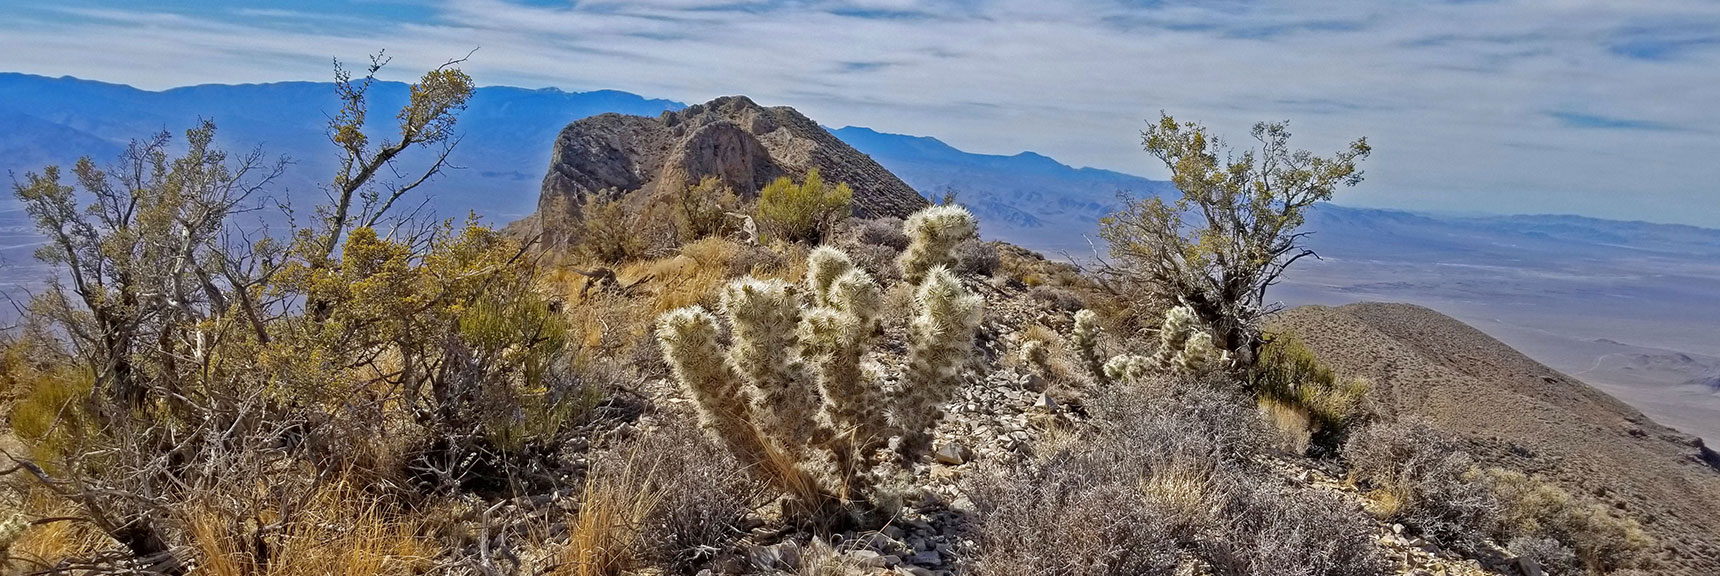 Desert Plants Thriving on the Gass Peak Summit Ridge. Mid Summit Bluff in Background. | Gass Peak Grand Crossing | Desert National Wildlife Refuge to Centennial Hills Las Vegas via Gass Peak Summit by Foot